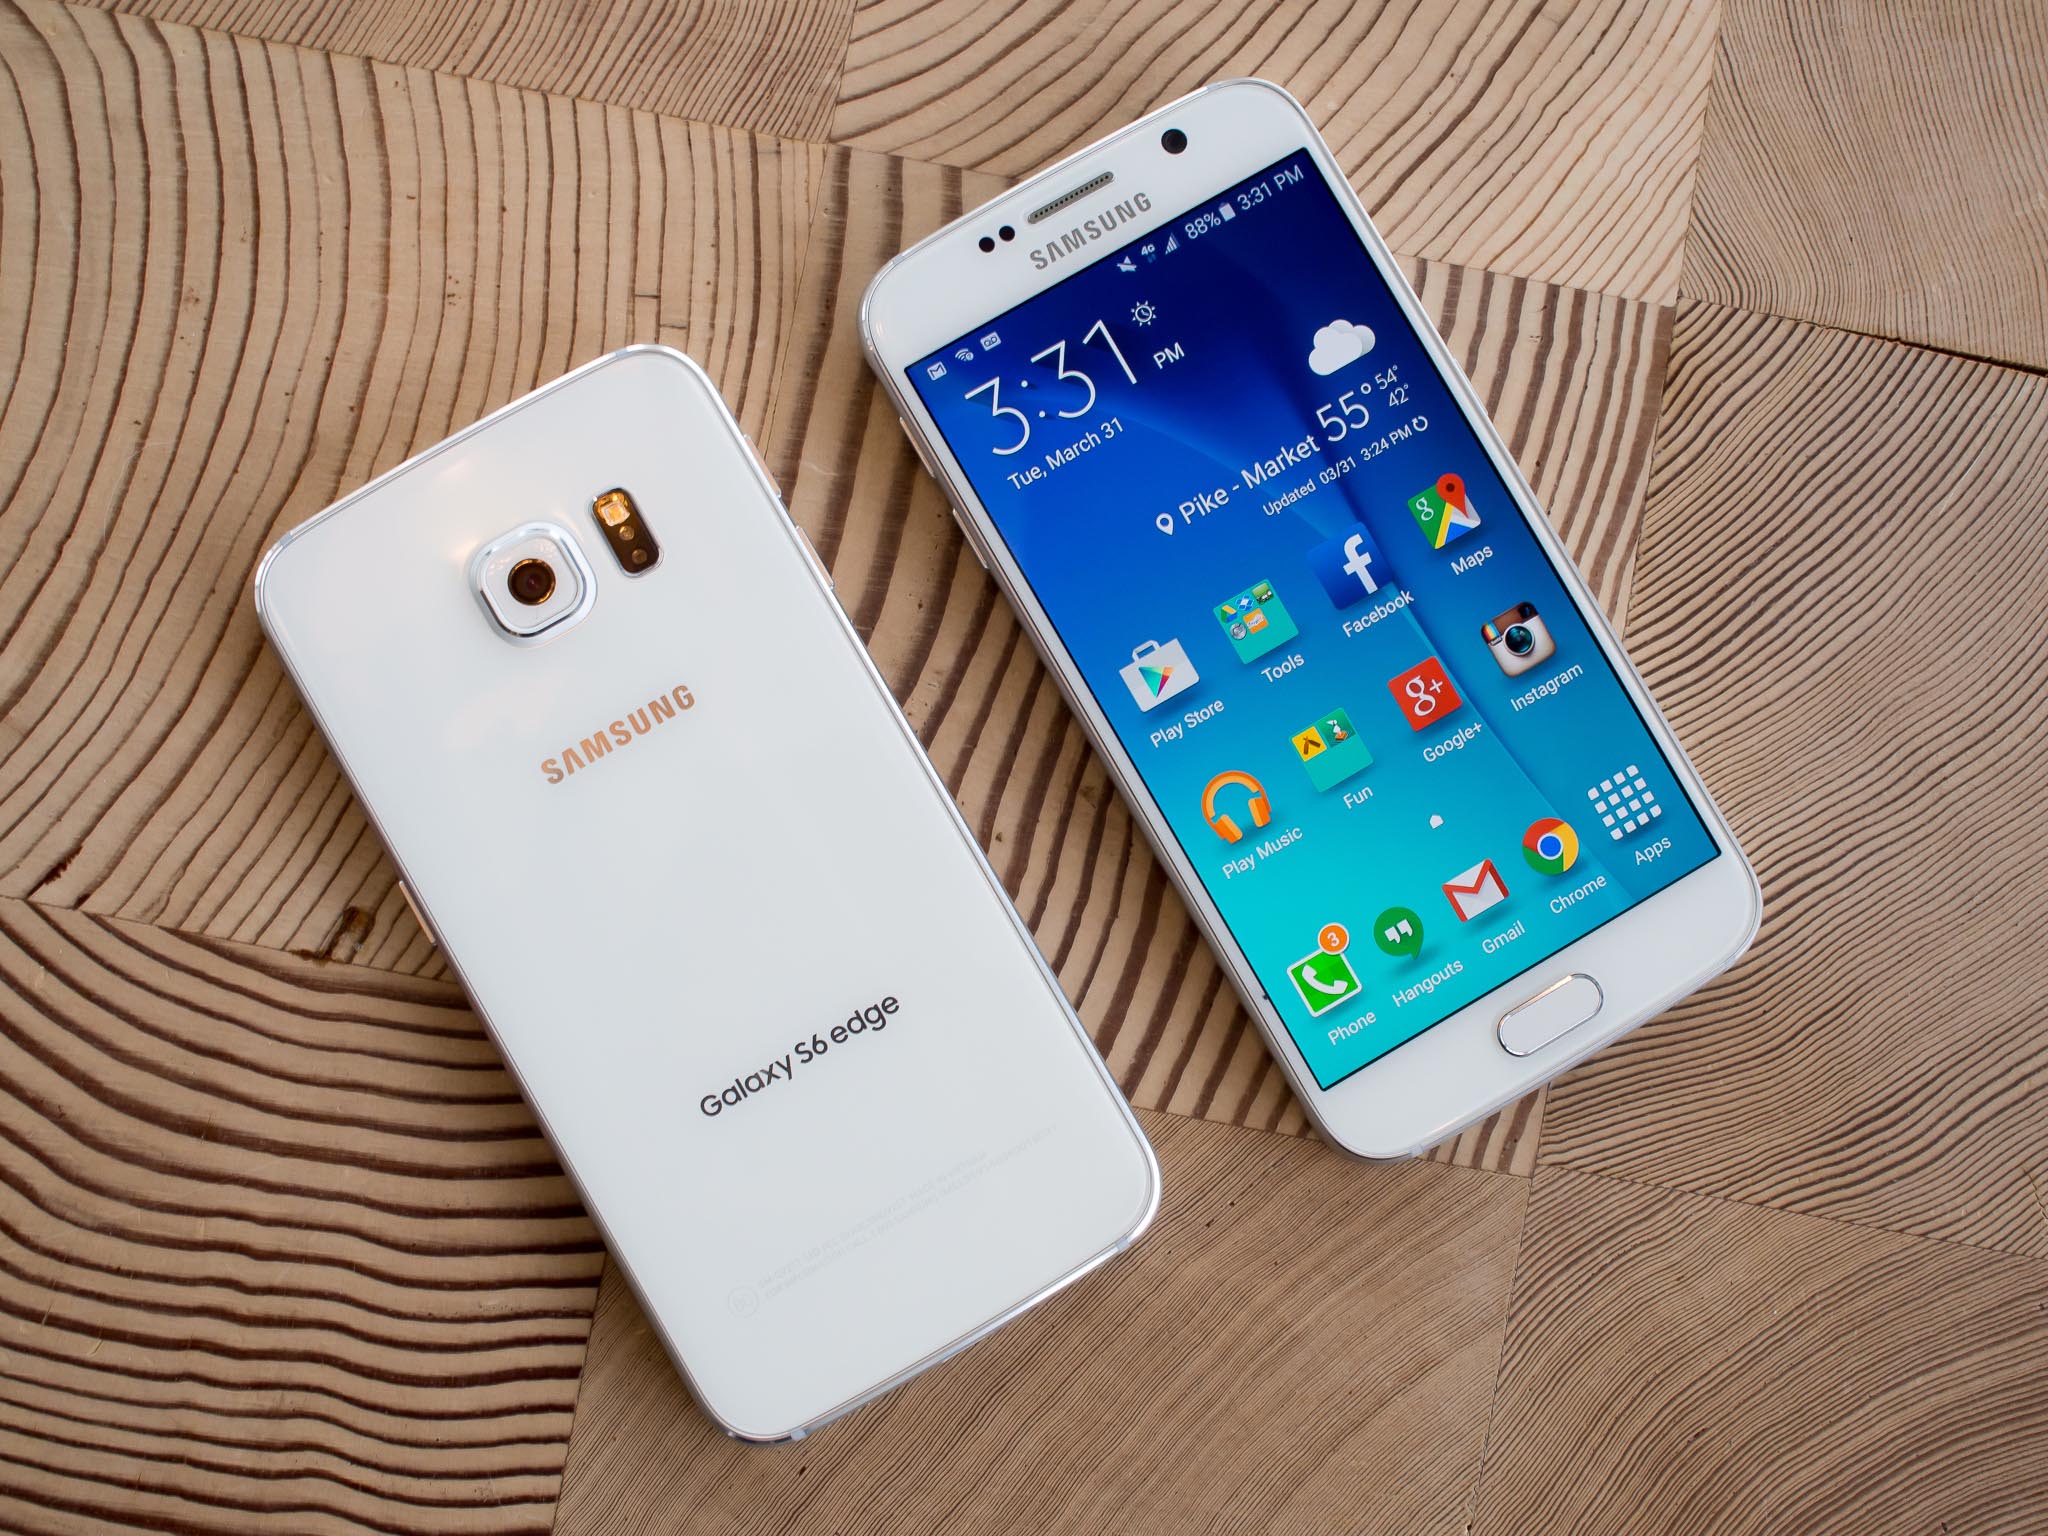 Galaxy S6 and Galaxy S6 edge